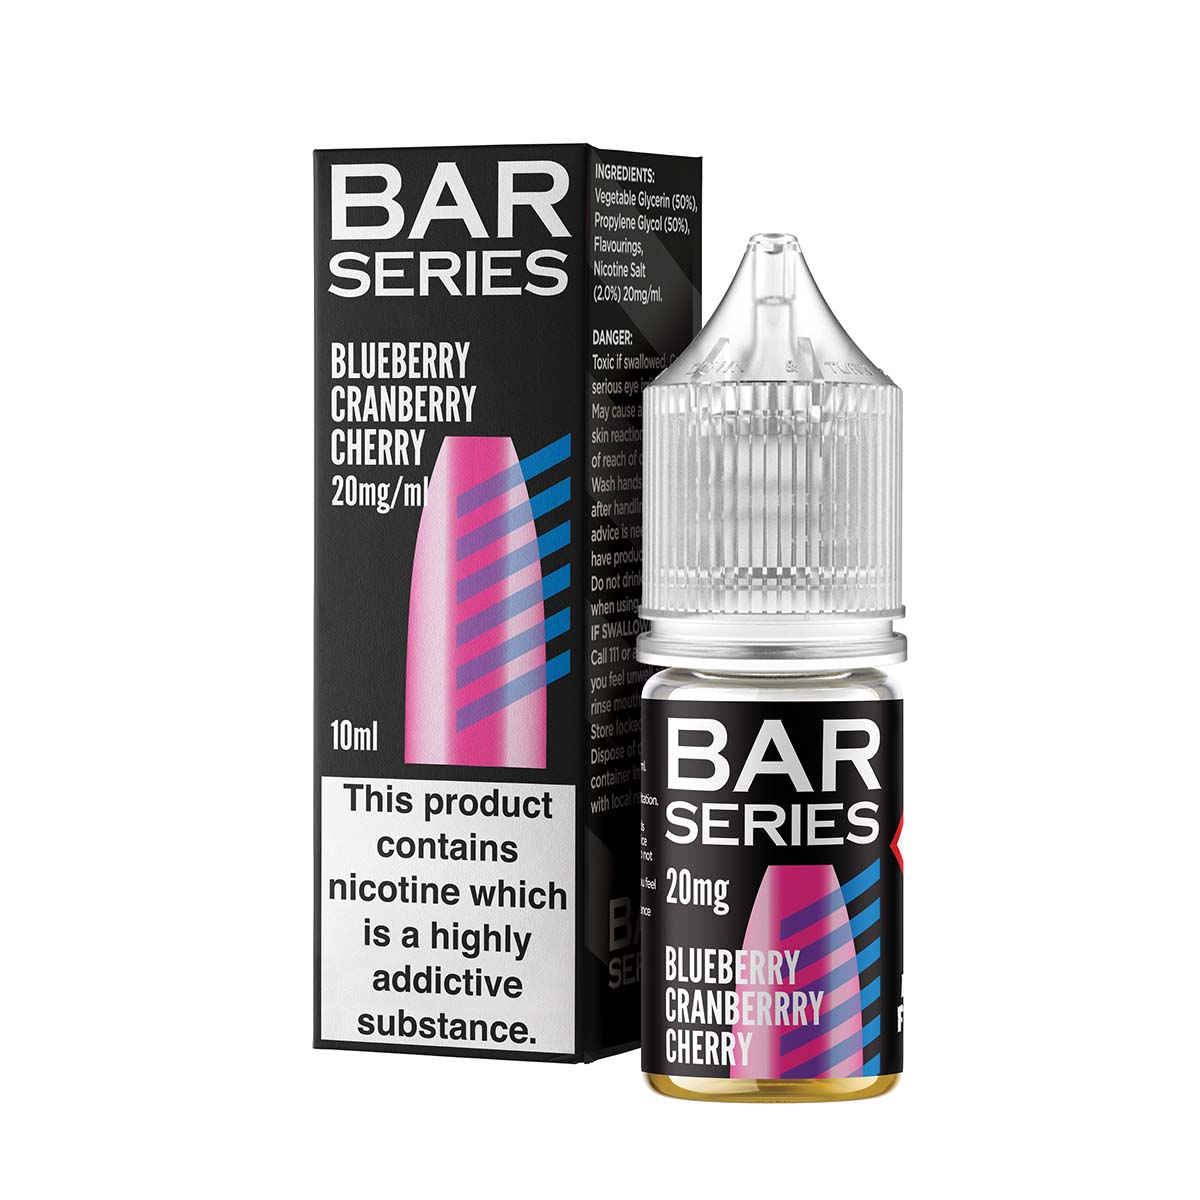 Blueberry Cranberry Cherry Nic Salt E-liquid By Bar Series